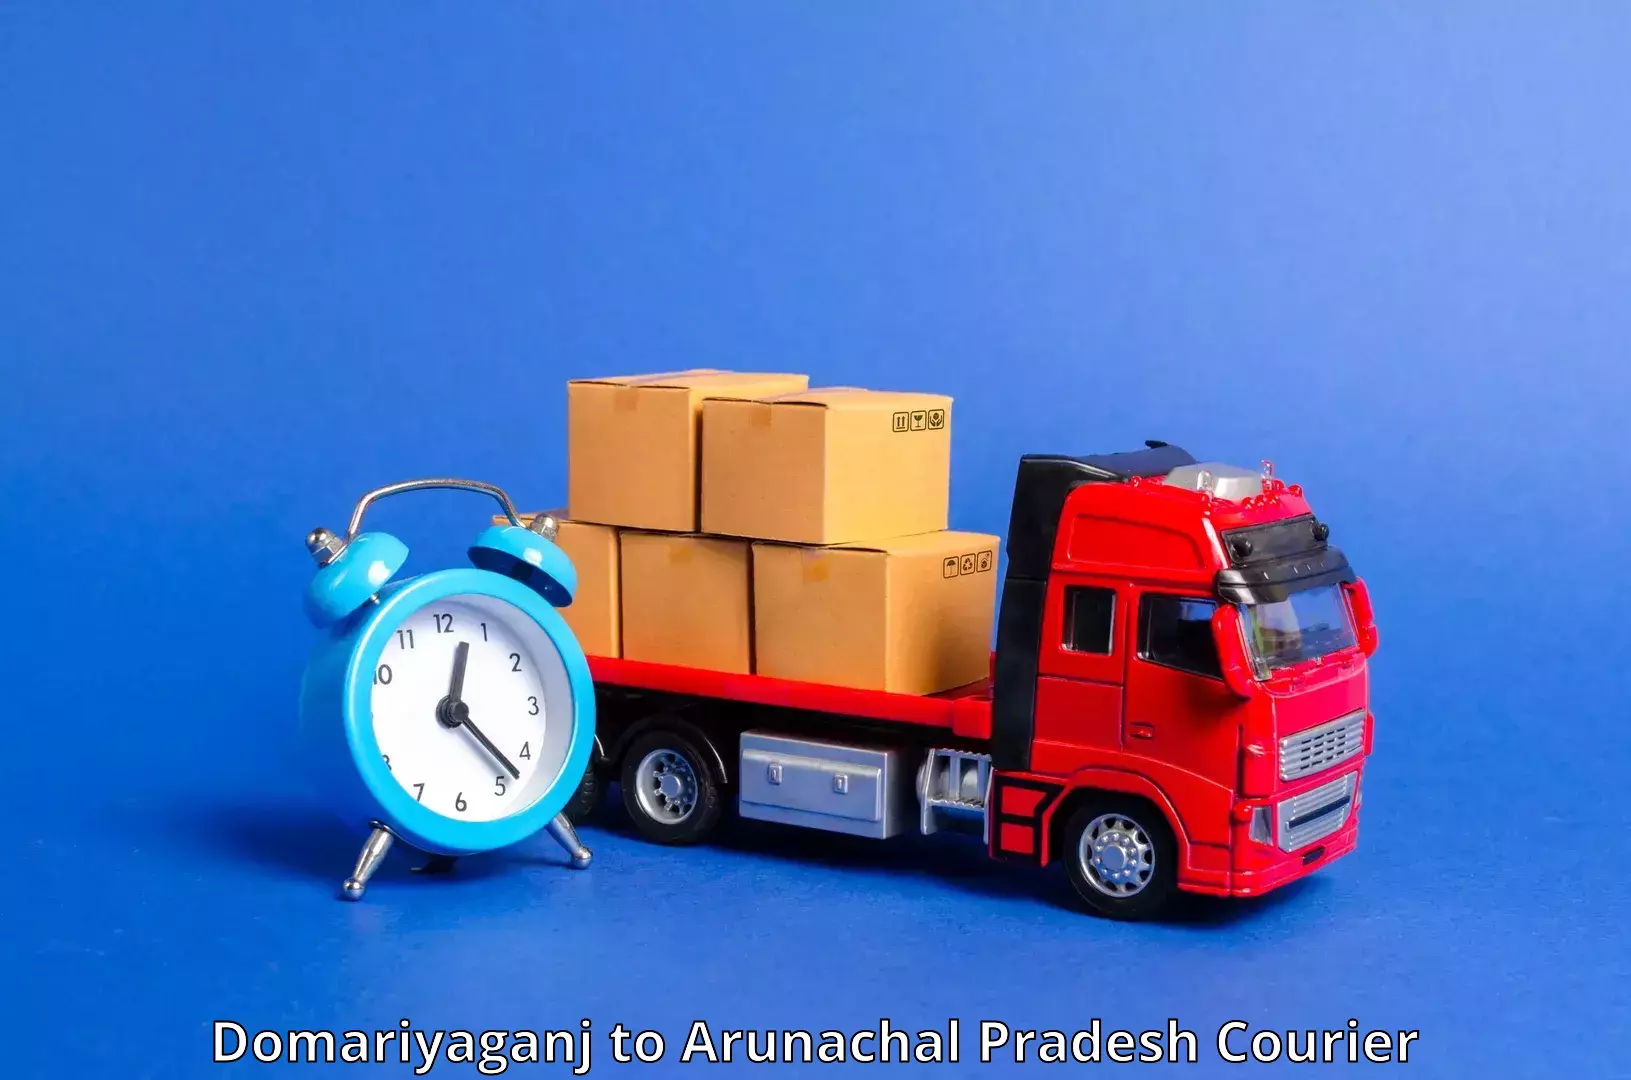 Global logistics network Domariyaganj to Roing